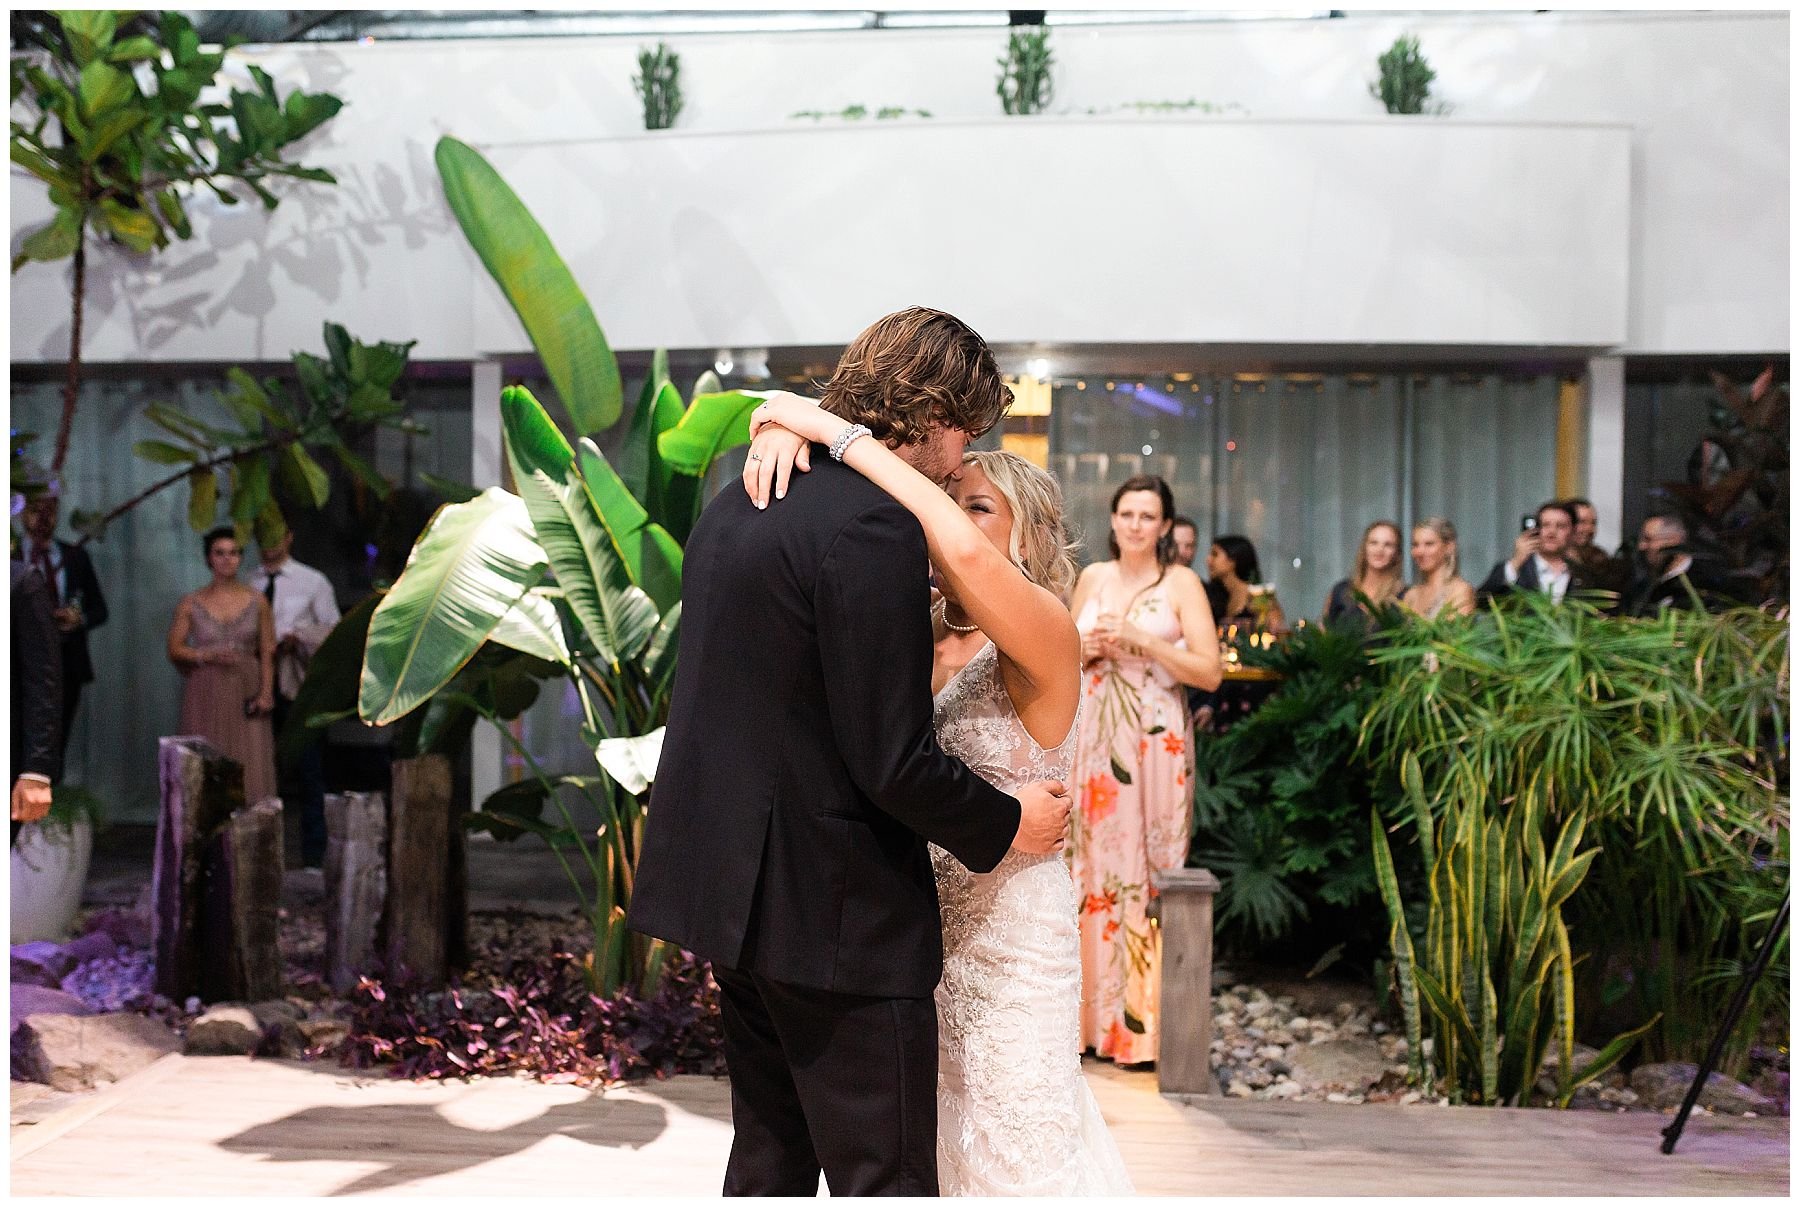 Bride and groom first dance at Aquatopia reception venue